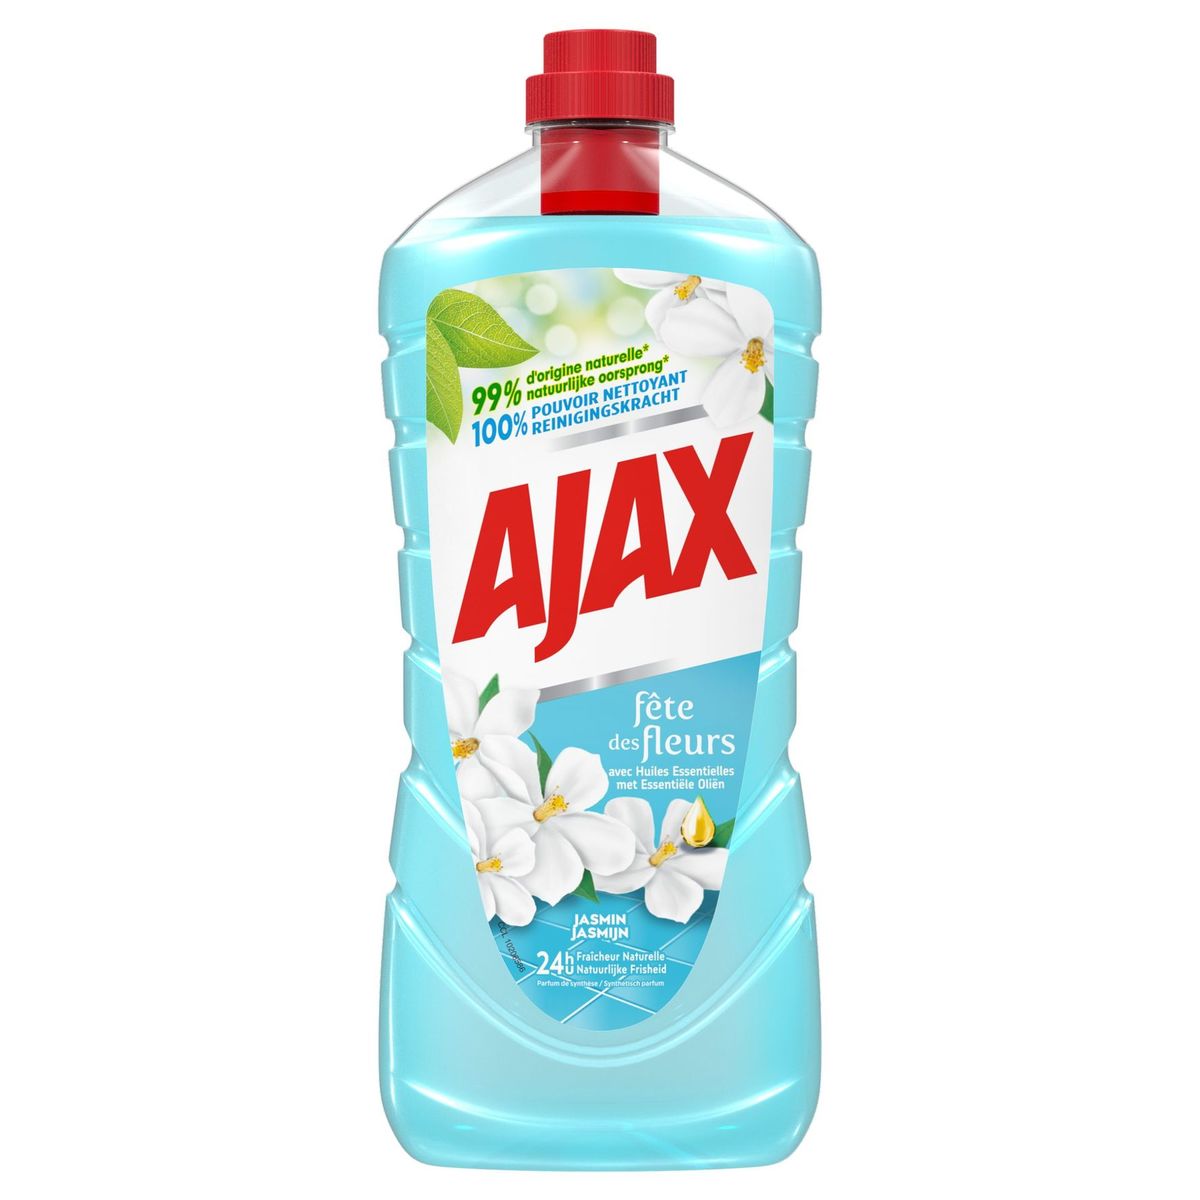 Ajax Fête des Fleurs Jasmijn allesreiniger - 1.25L